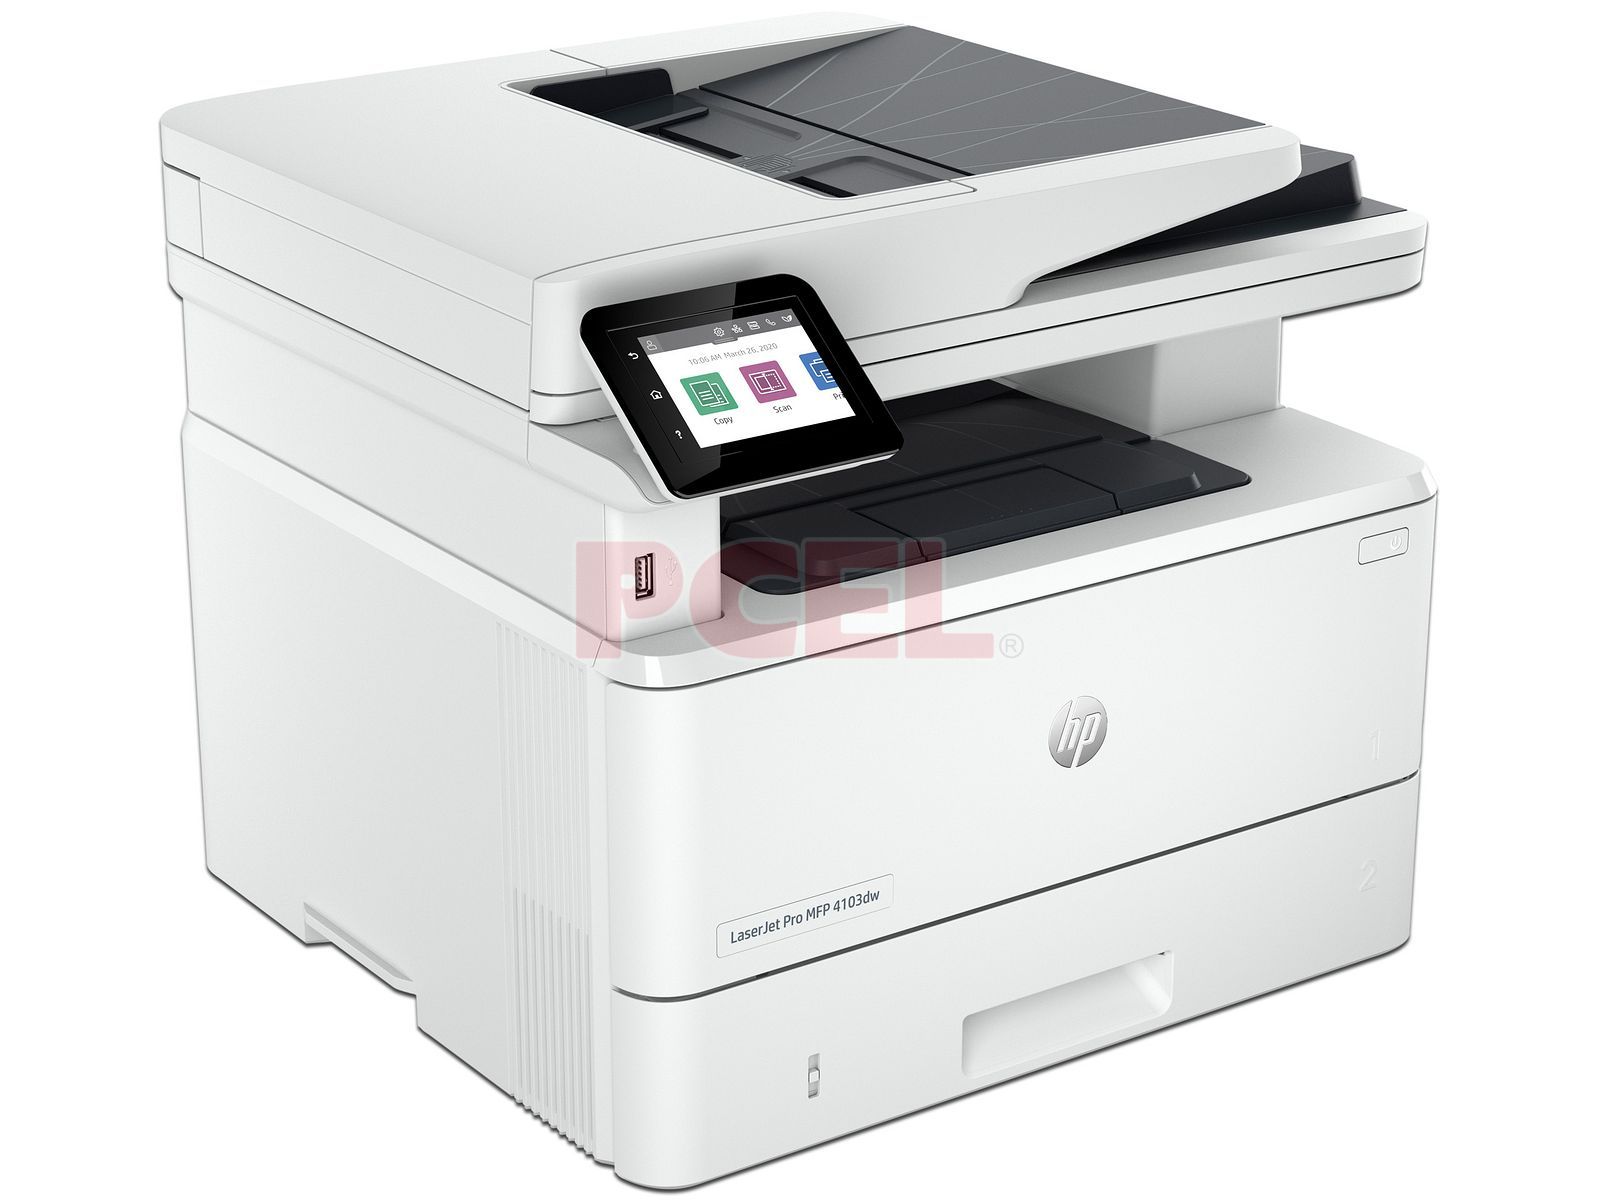 Multifuncional HP LaserJet Pro MFP 4103dw, Impresora Láser